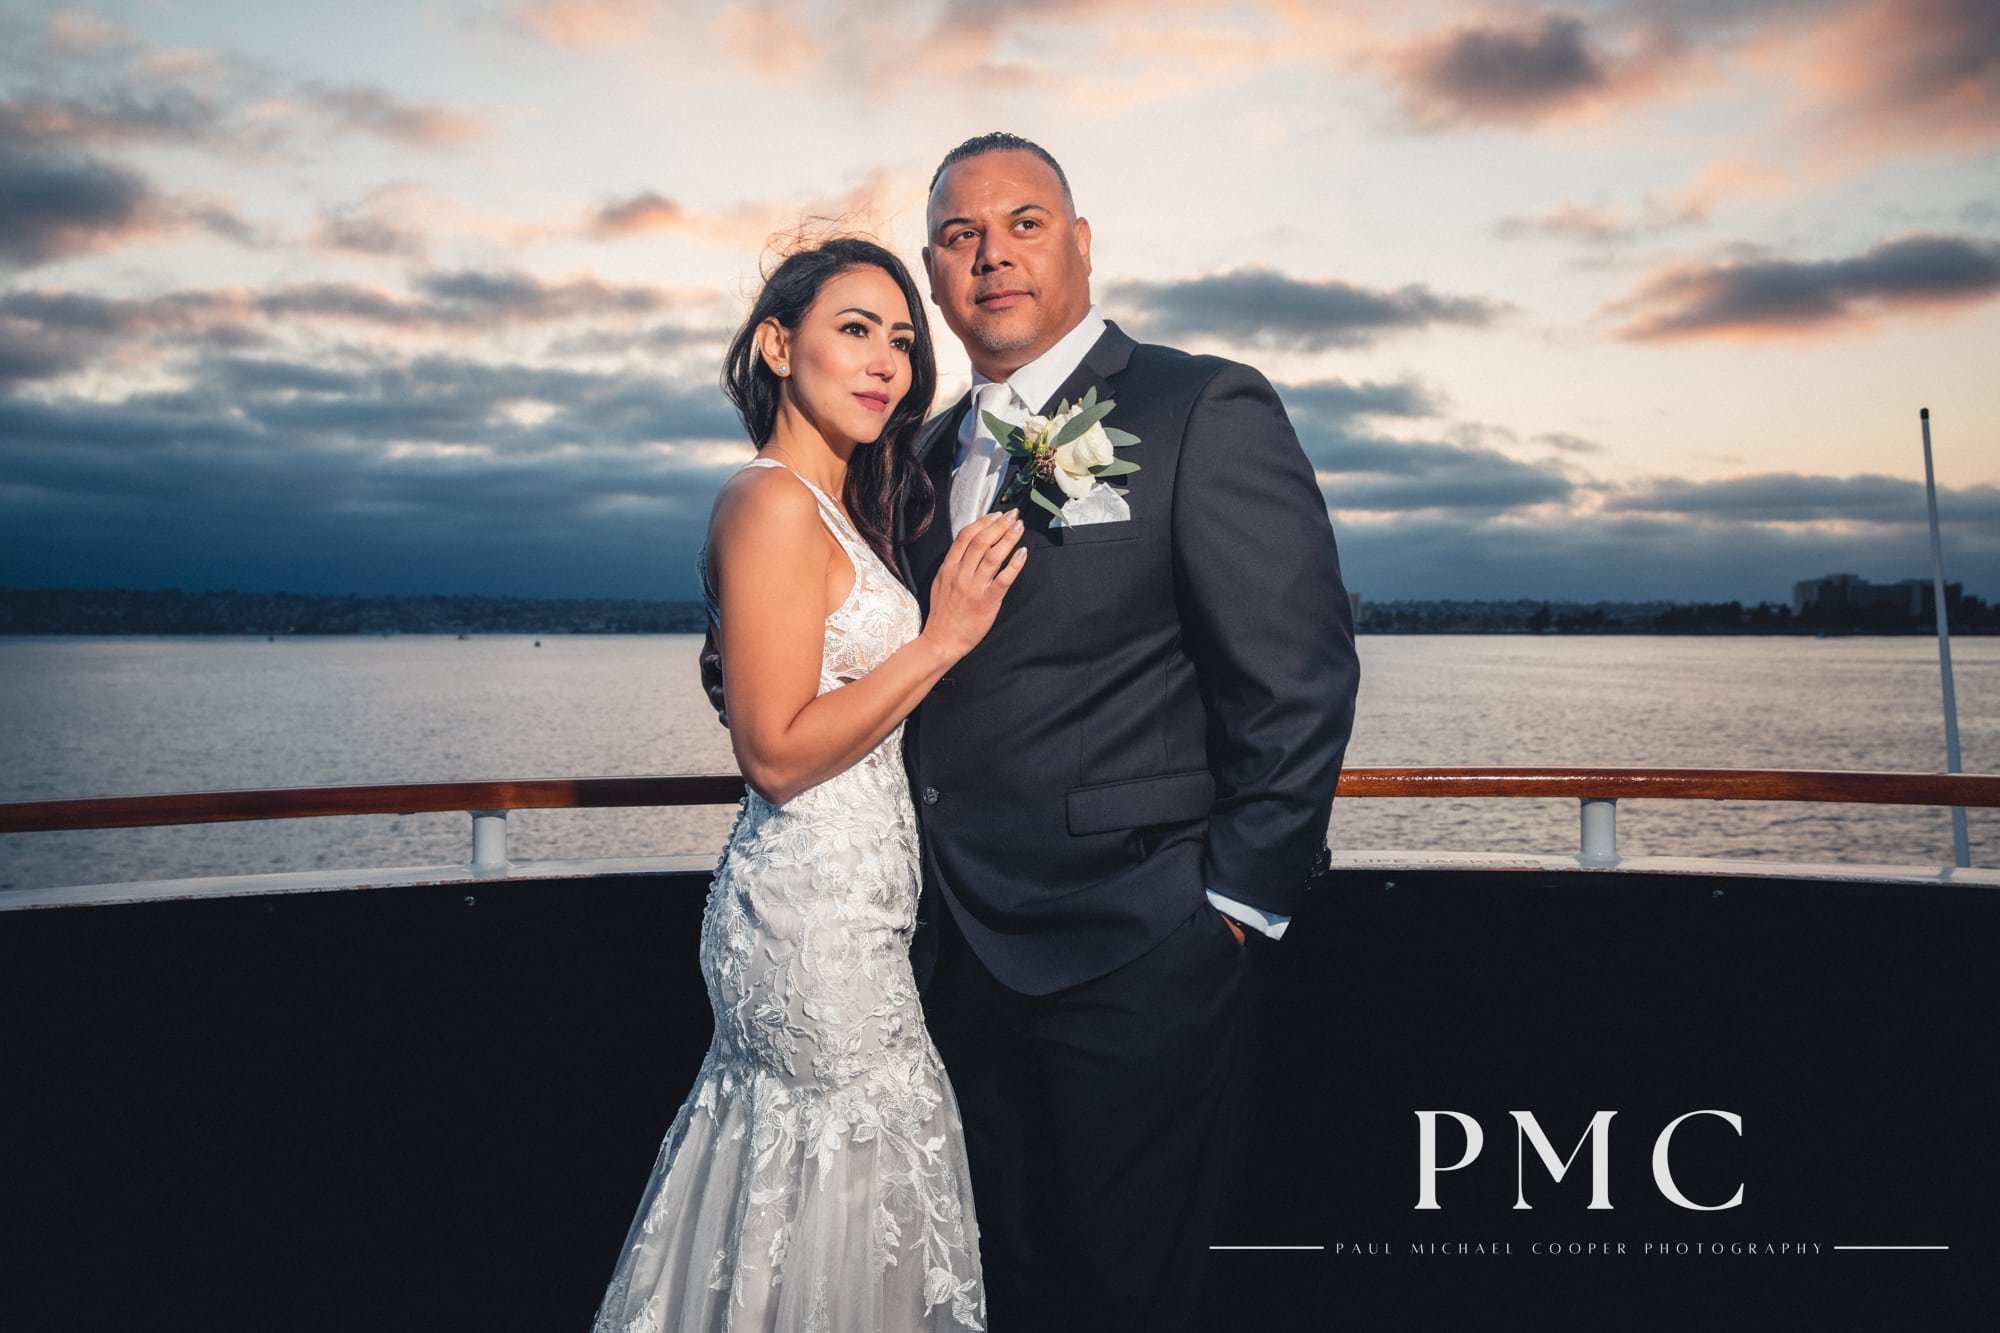 Jennifer + Charles | Romantic Yacht Wedding in San Diego Bay